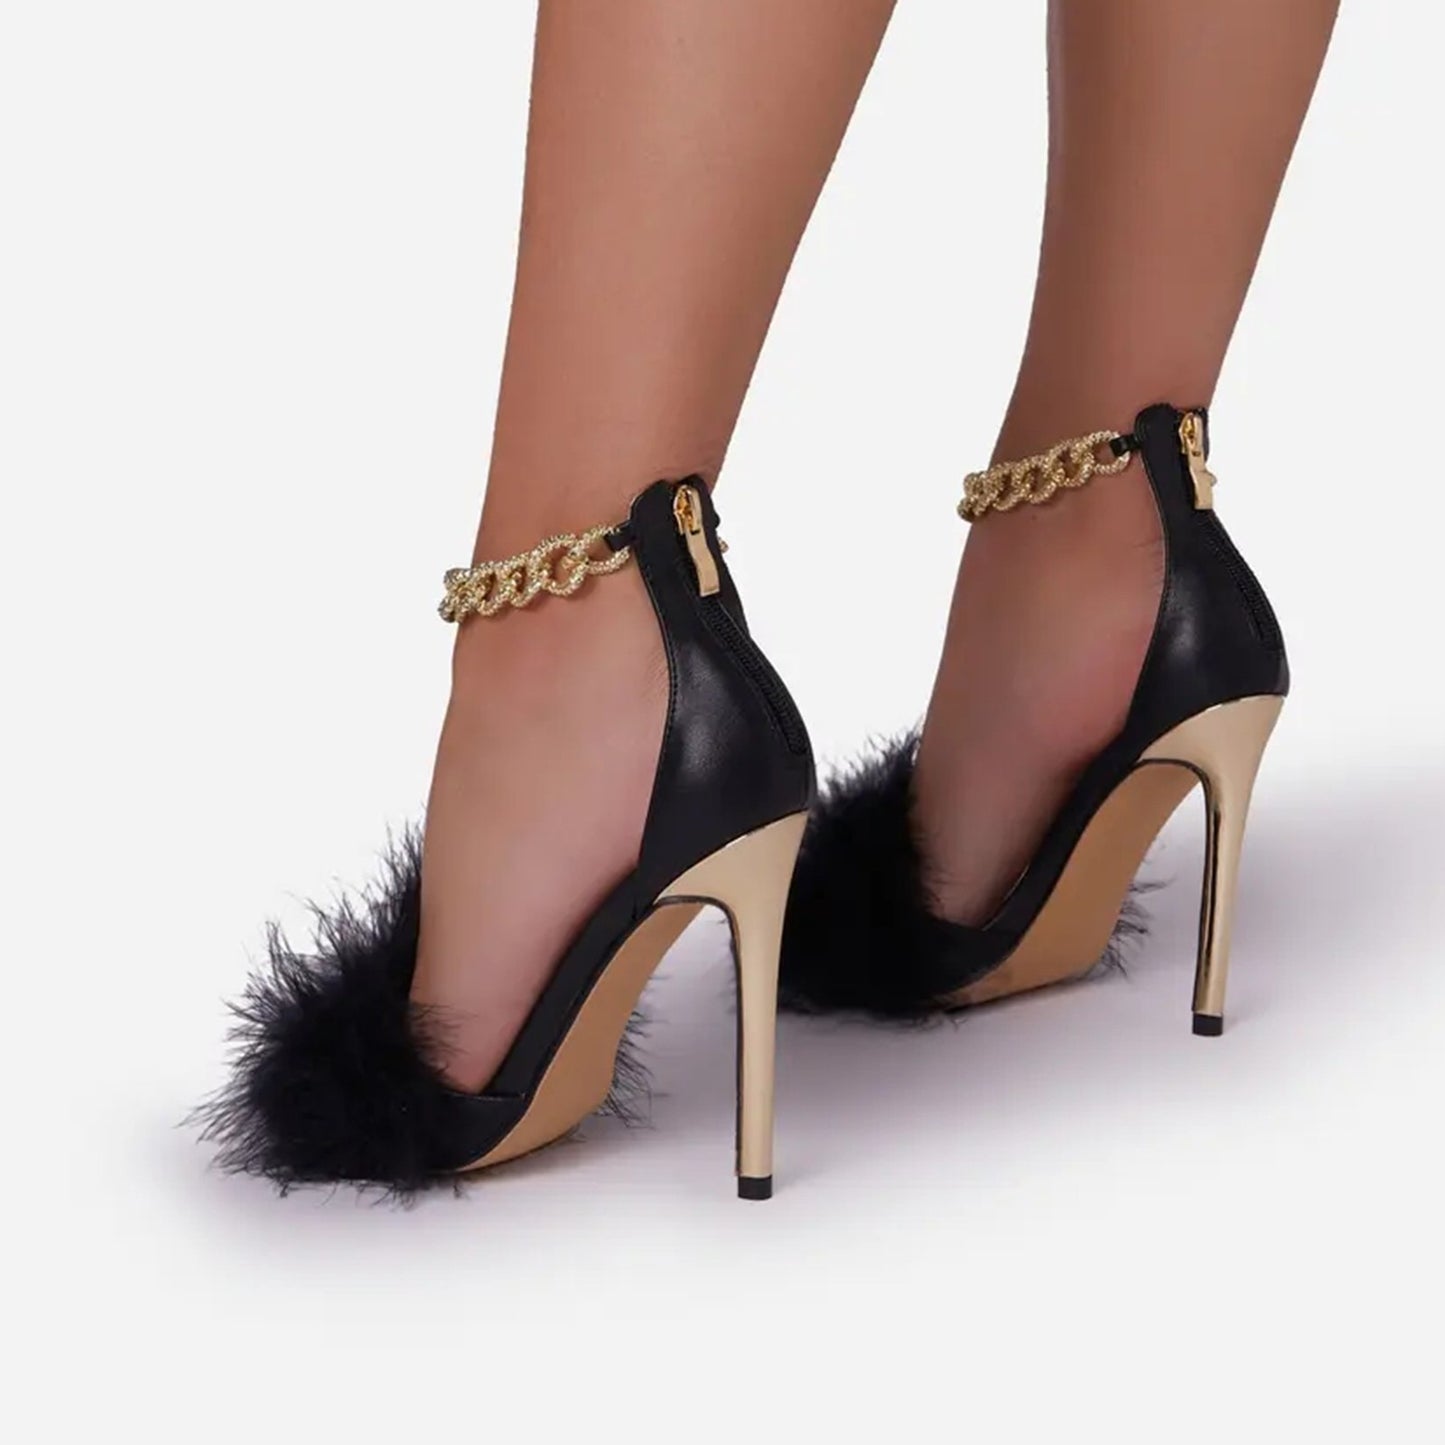 White Patent Heels - Feather High Heel Sandals - Stiletto Heels - Lulus